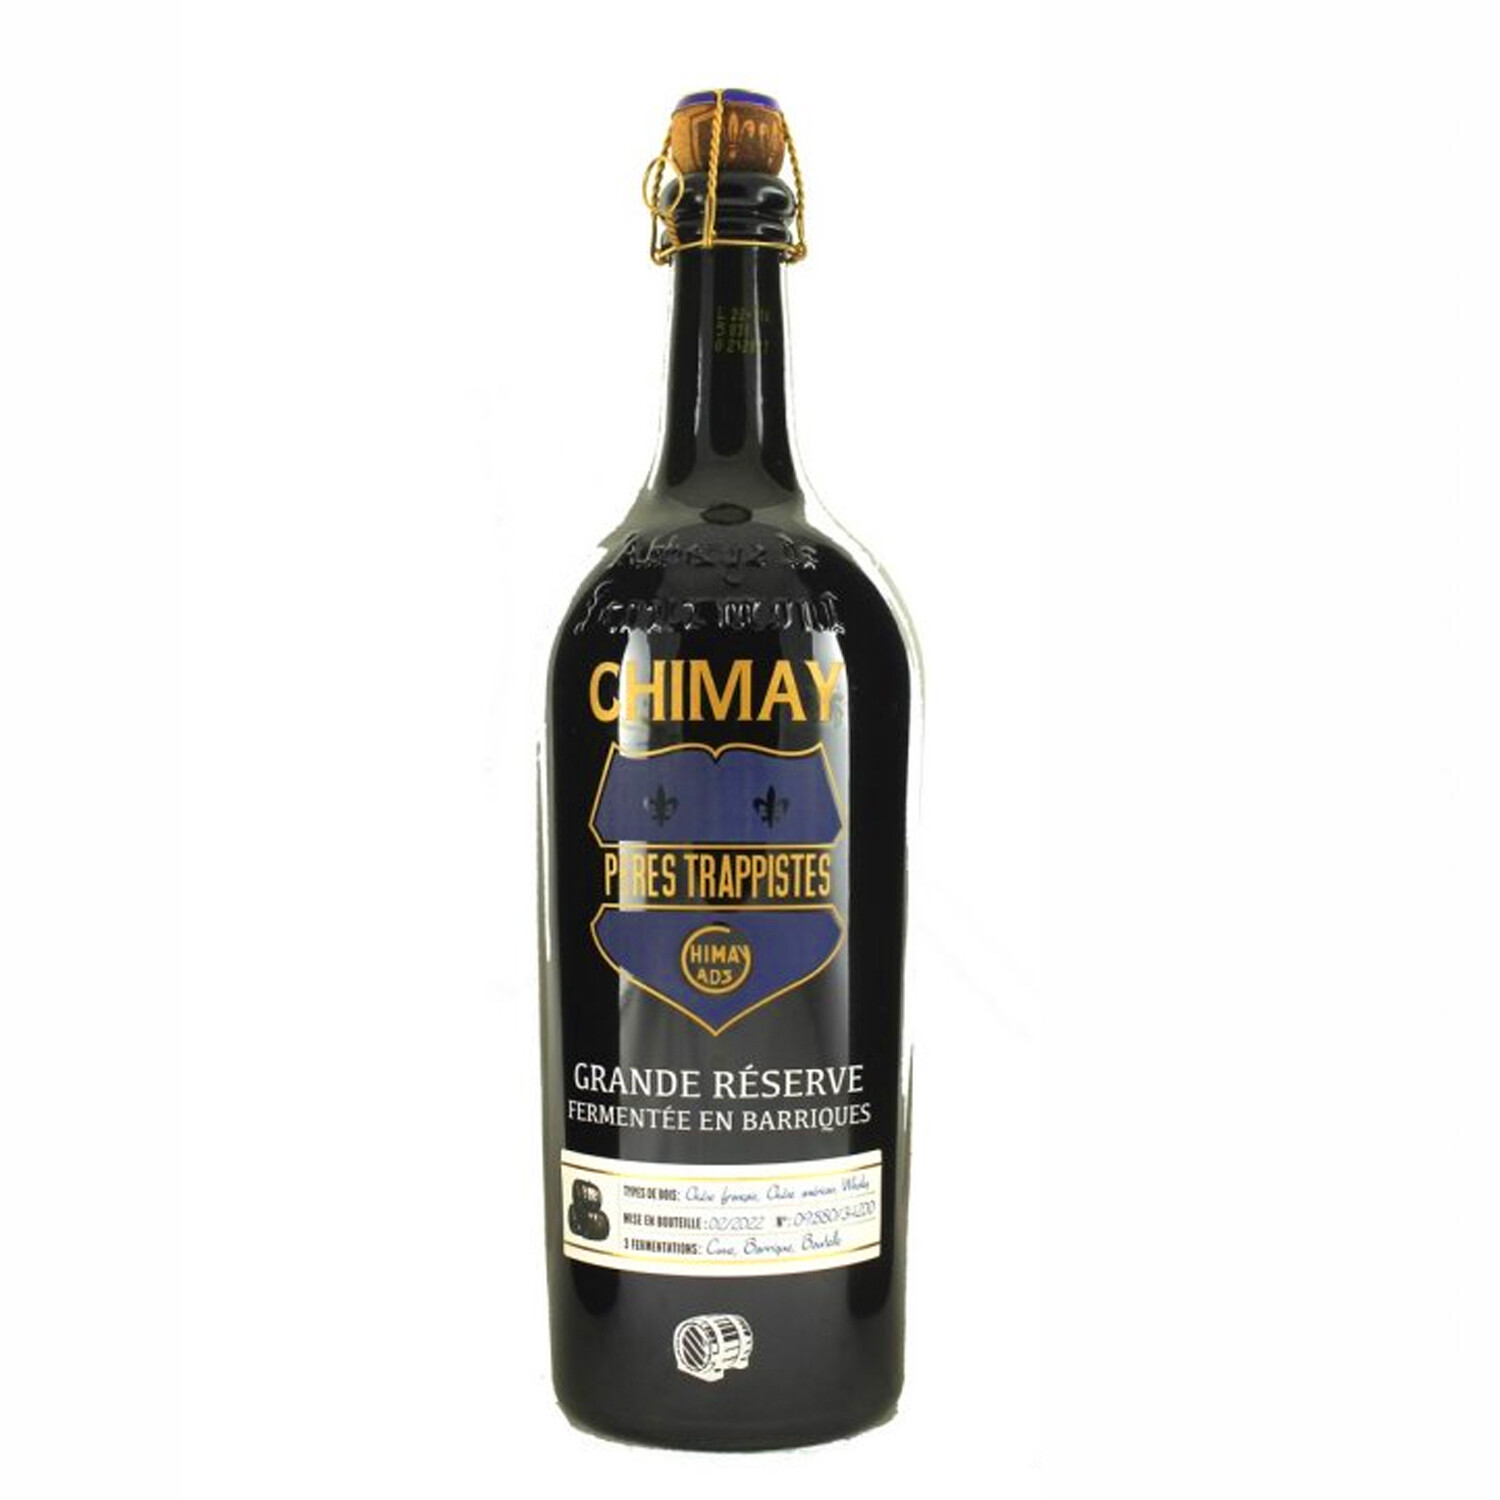 Chimay Grande Reserve Whisky BA Quadrupel LARGE